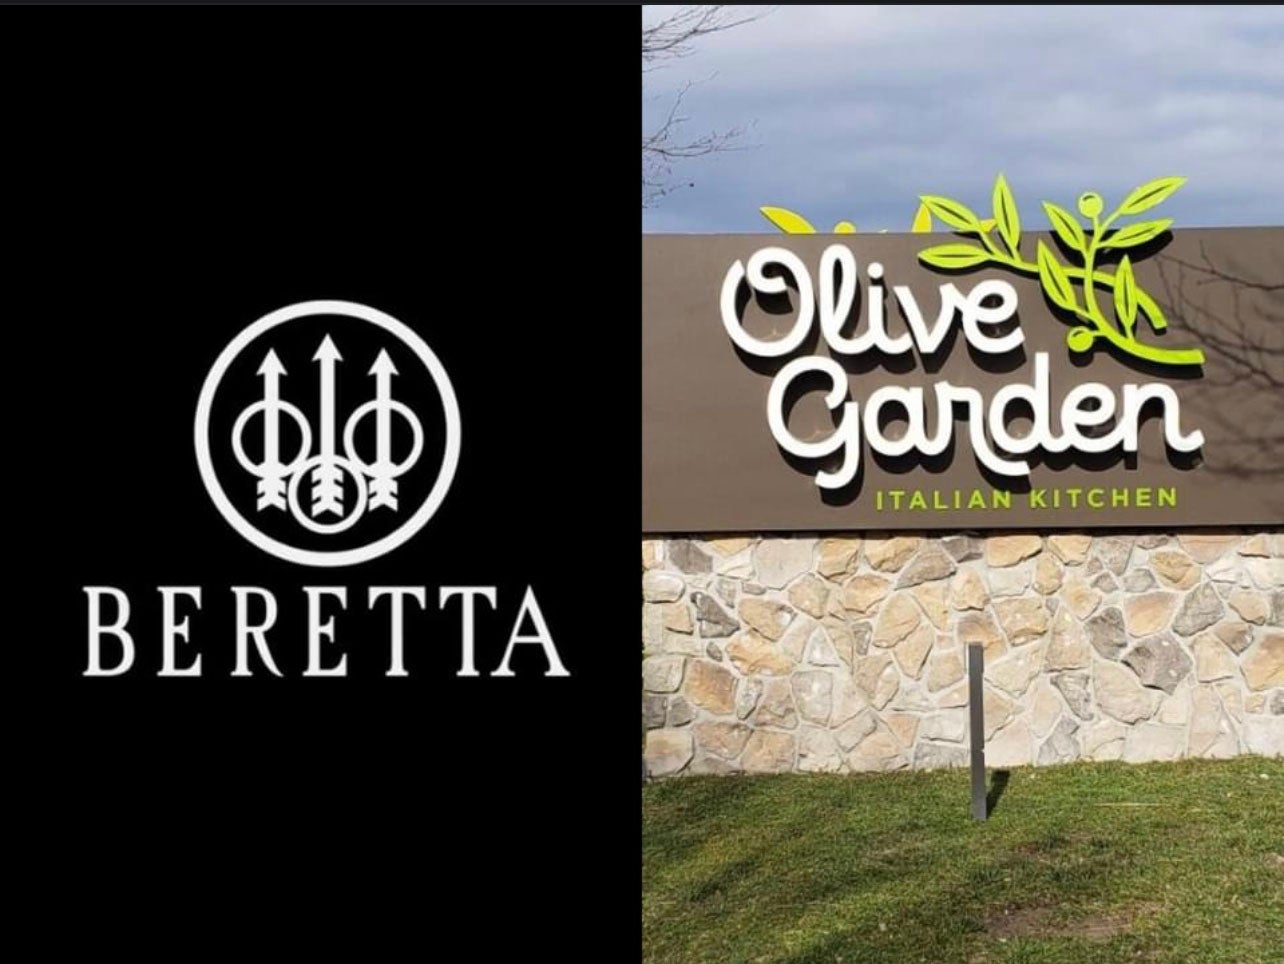 what if Beretta is Olive Garden